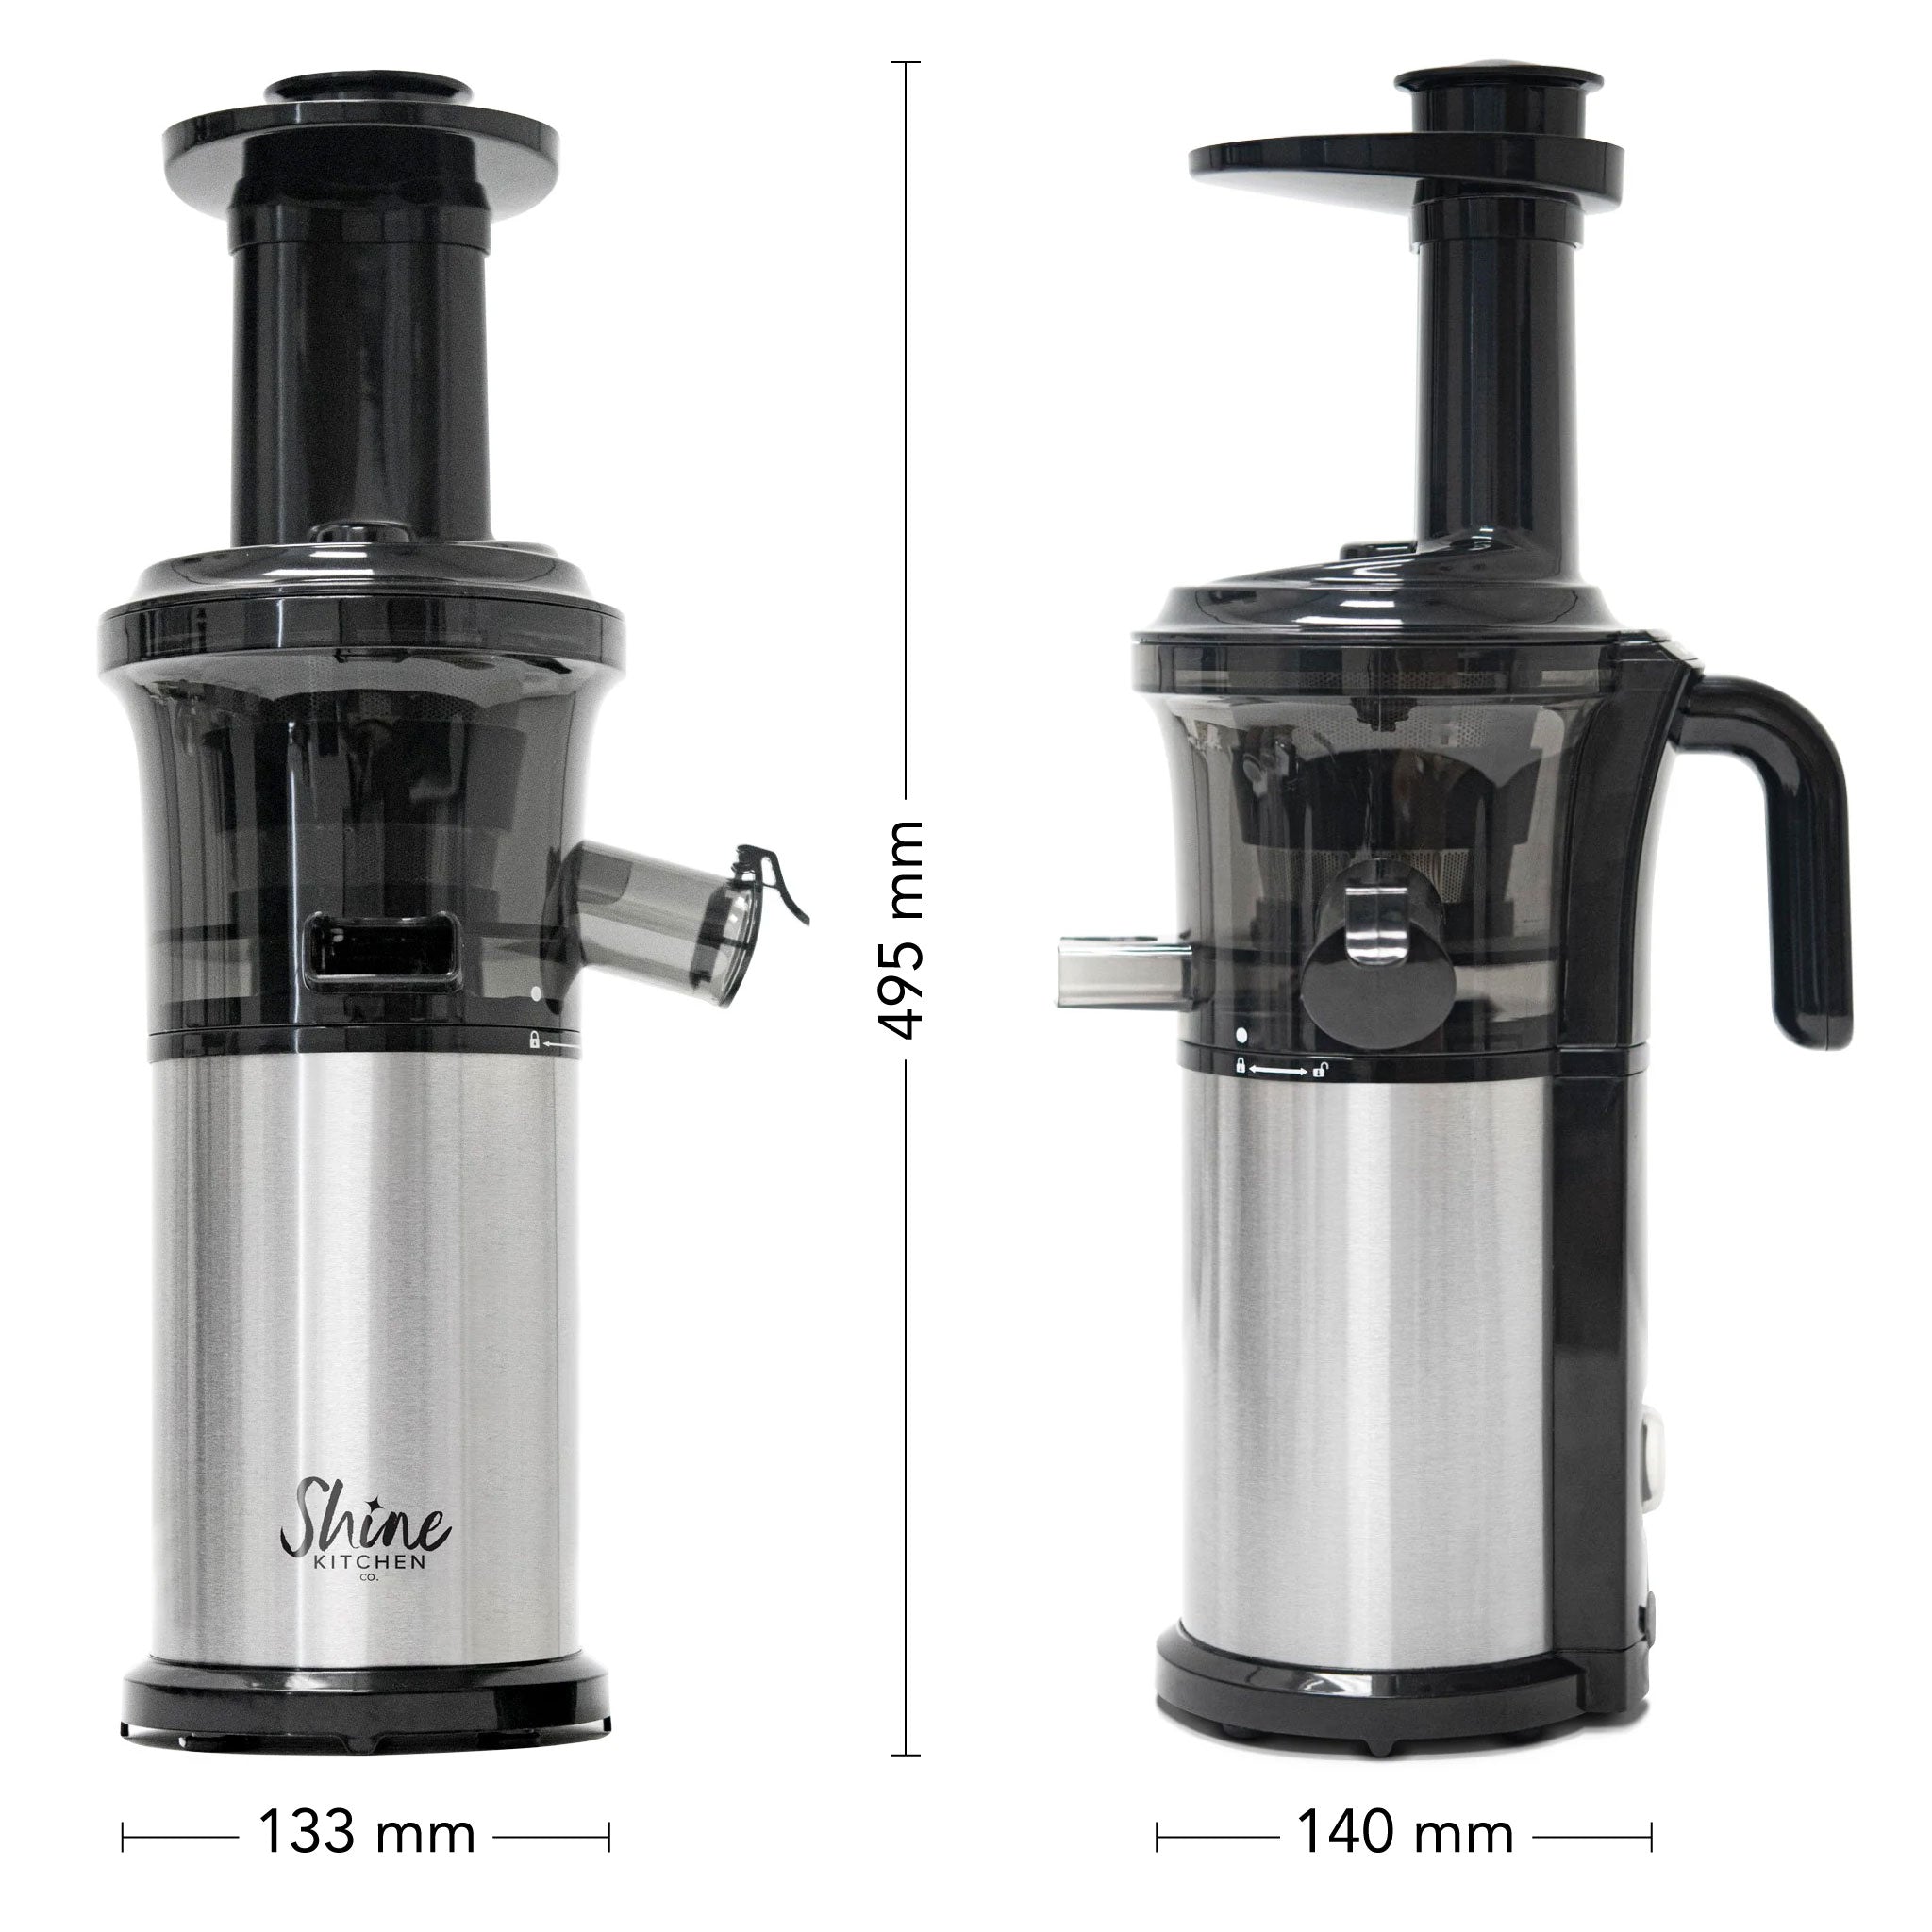 Shine Kitchen Co. Cold Press Vertical Slow Juicer SJV-107 - Size 133 x 140 x 495 mm